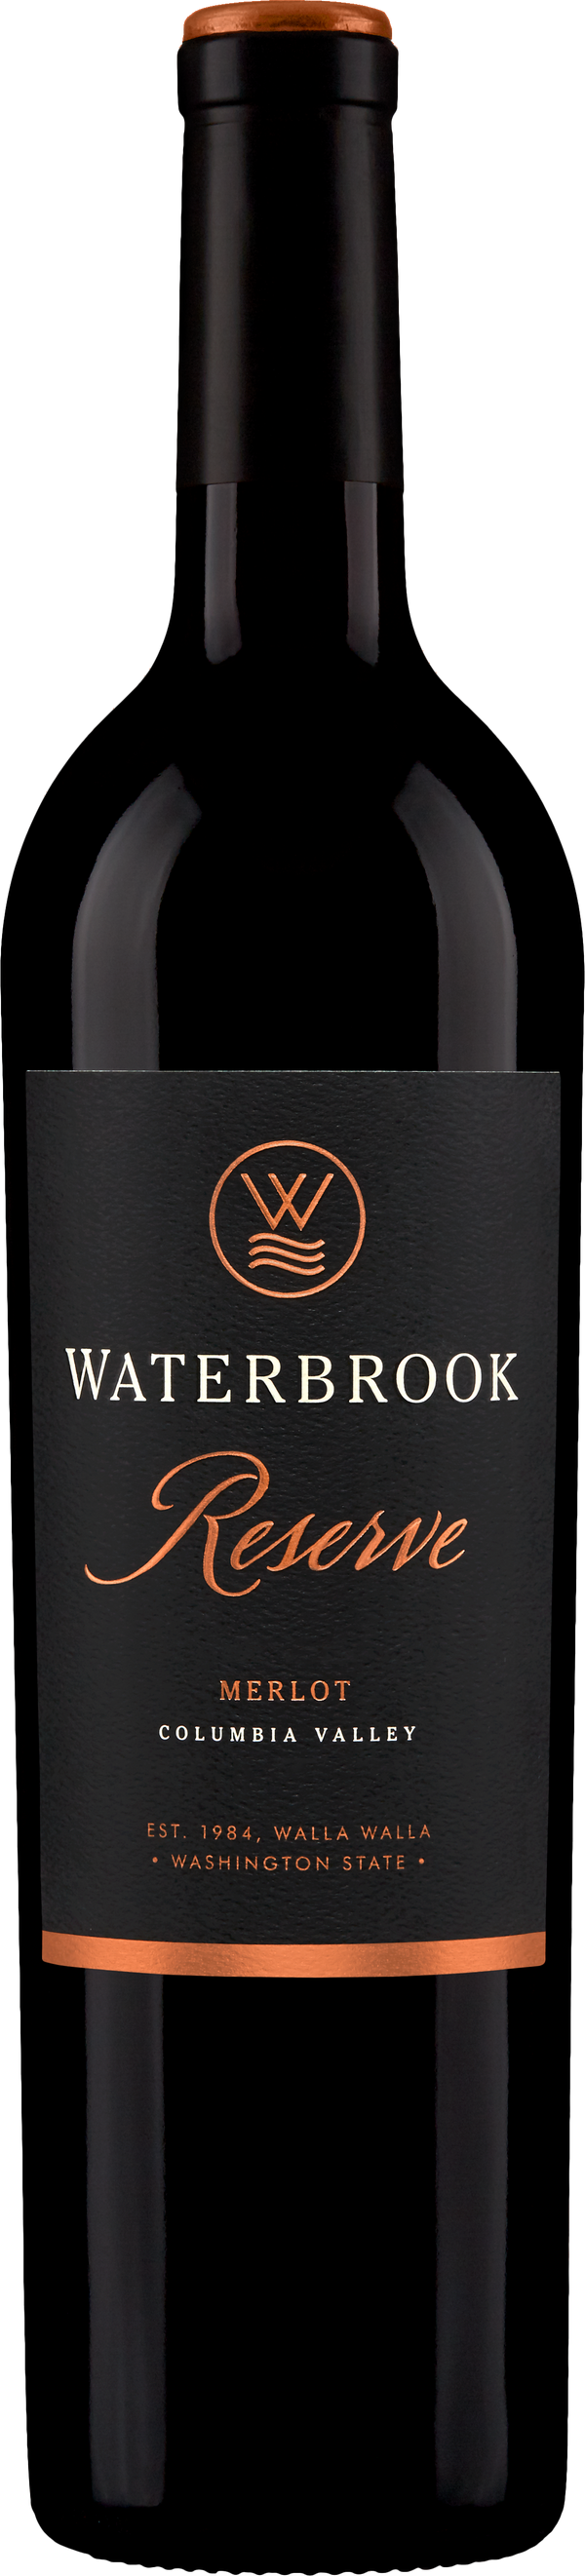 Waterbrook 2018 Reserve Merlot